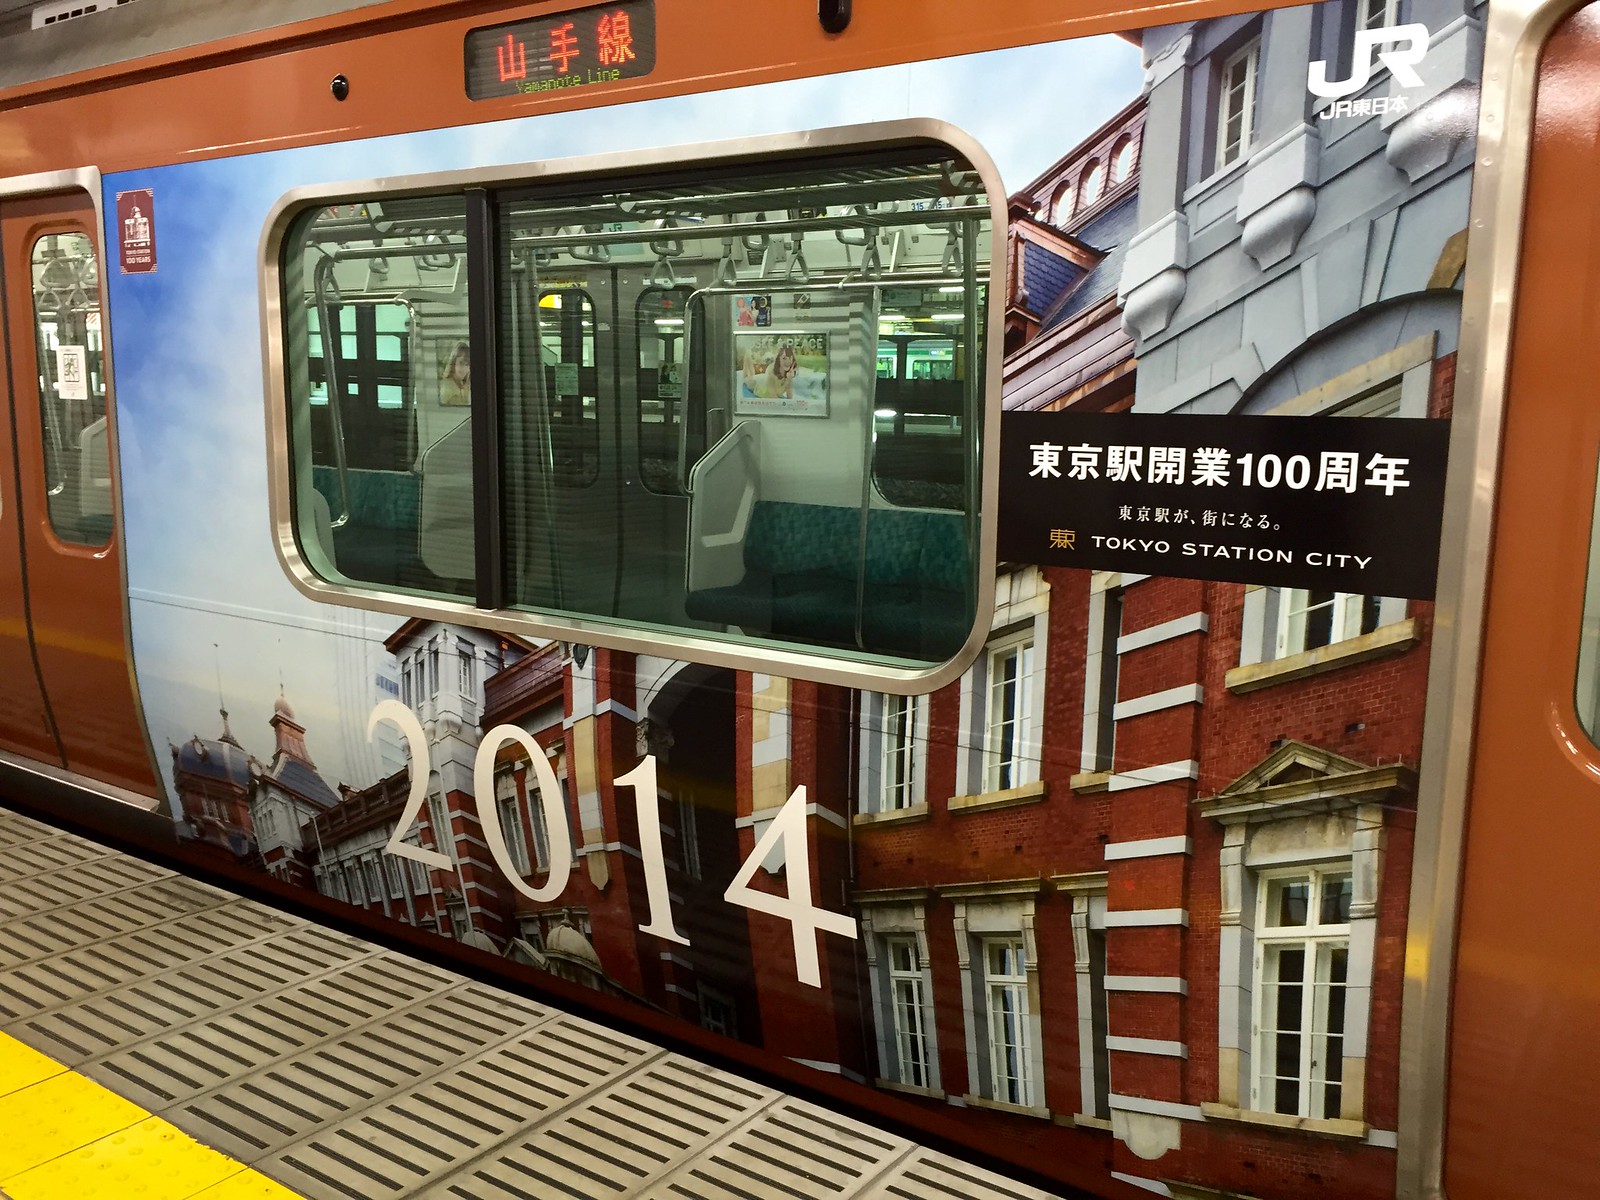 Yamanote Line Train in the 100 Year Tokyo Anniversary version